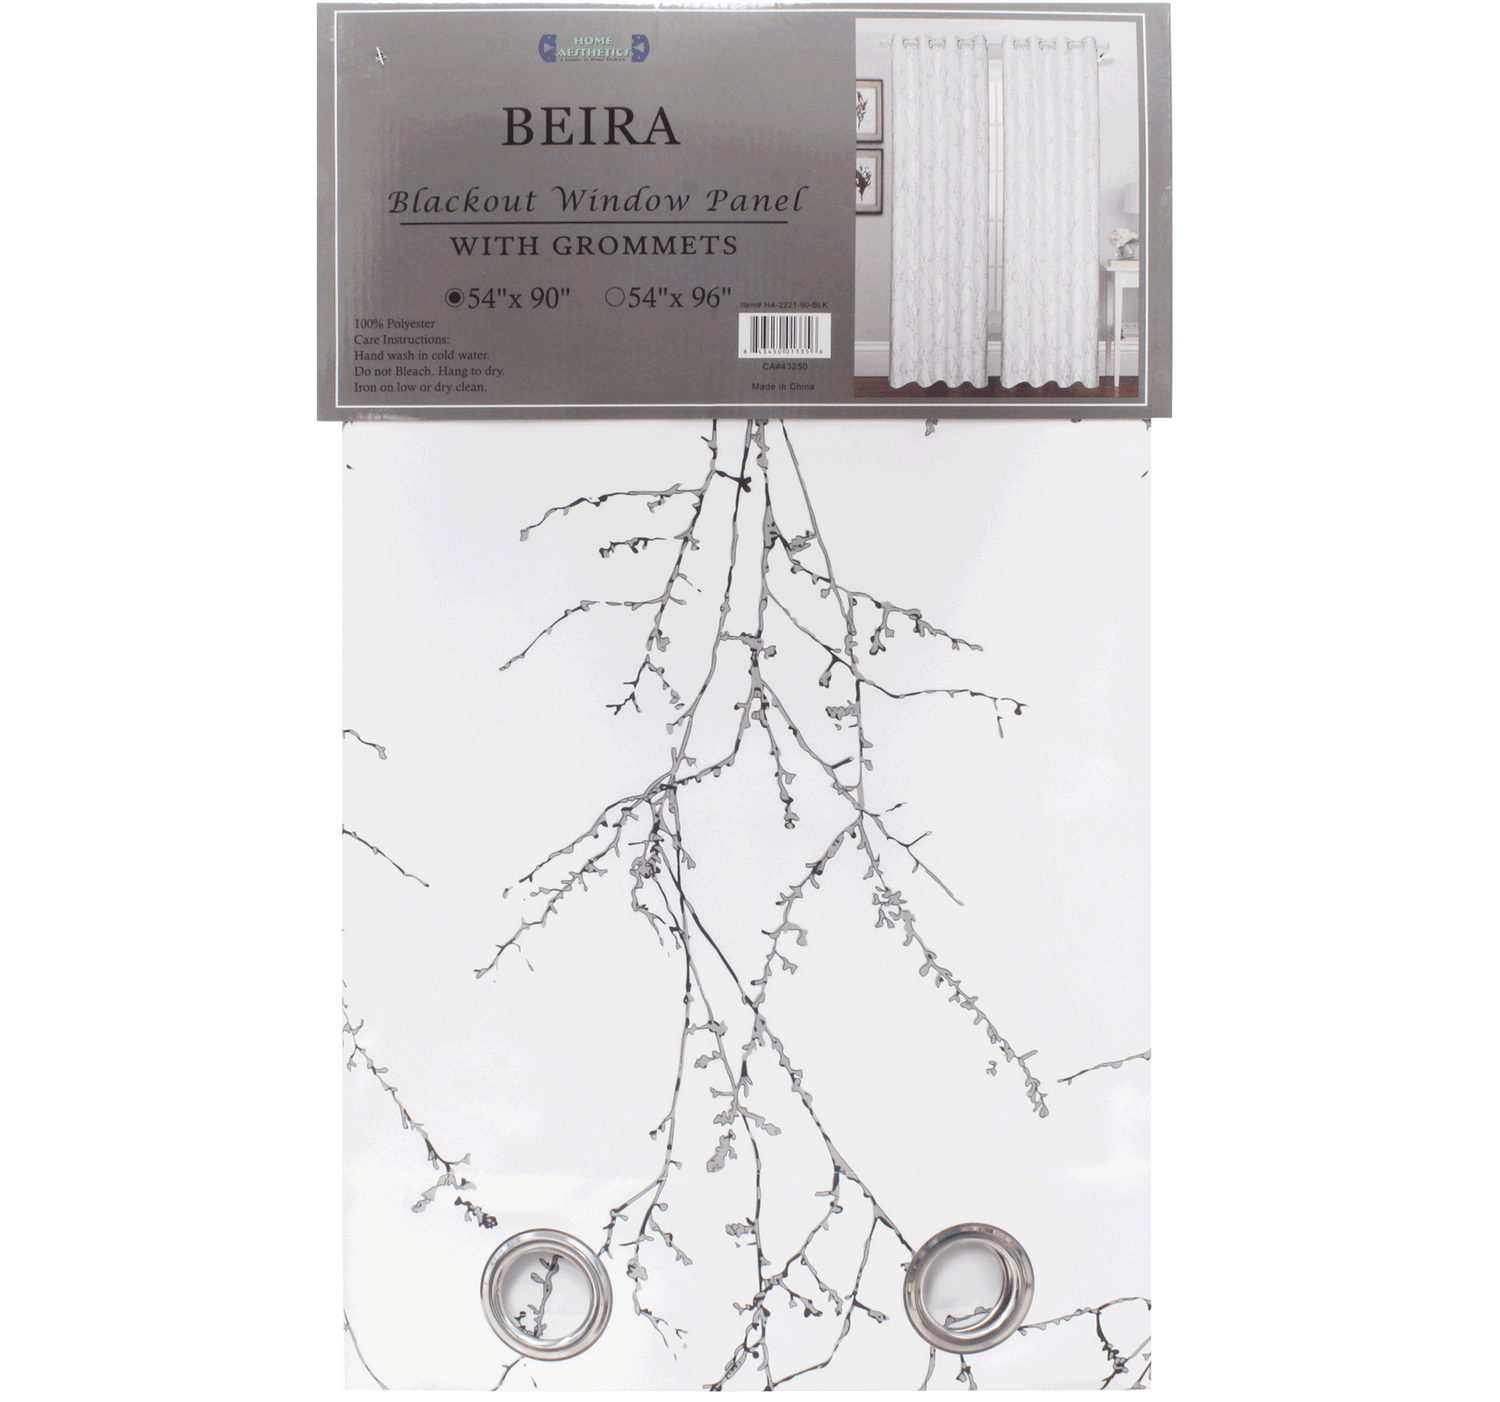 Beira Blackout Curtain Sizes: 54" x 84", 54" x 96"